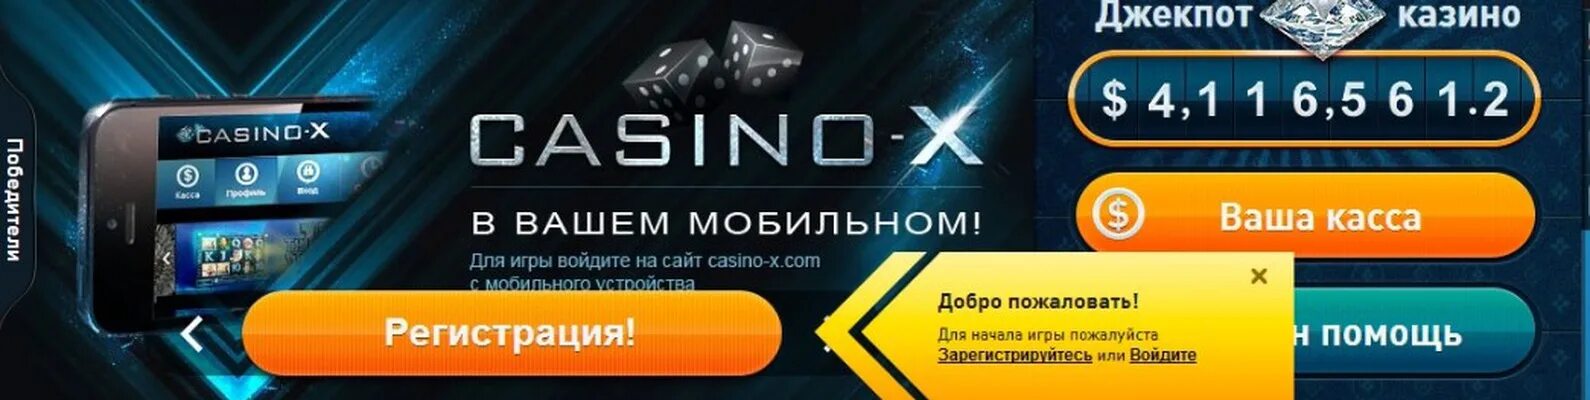 Casino x сайт xcazz2. Казино х. Казино Икс Casino-x. Casino x зеркало.